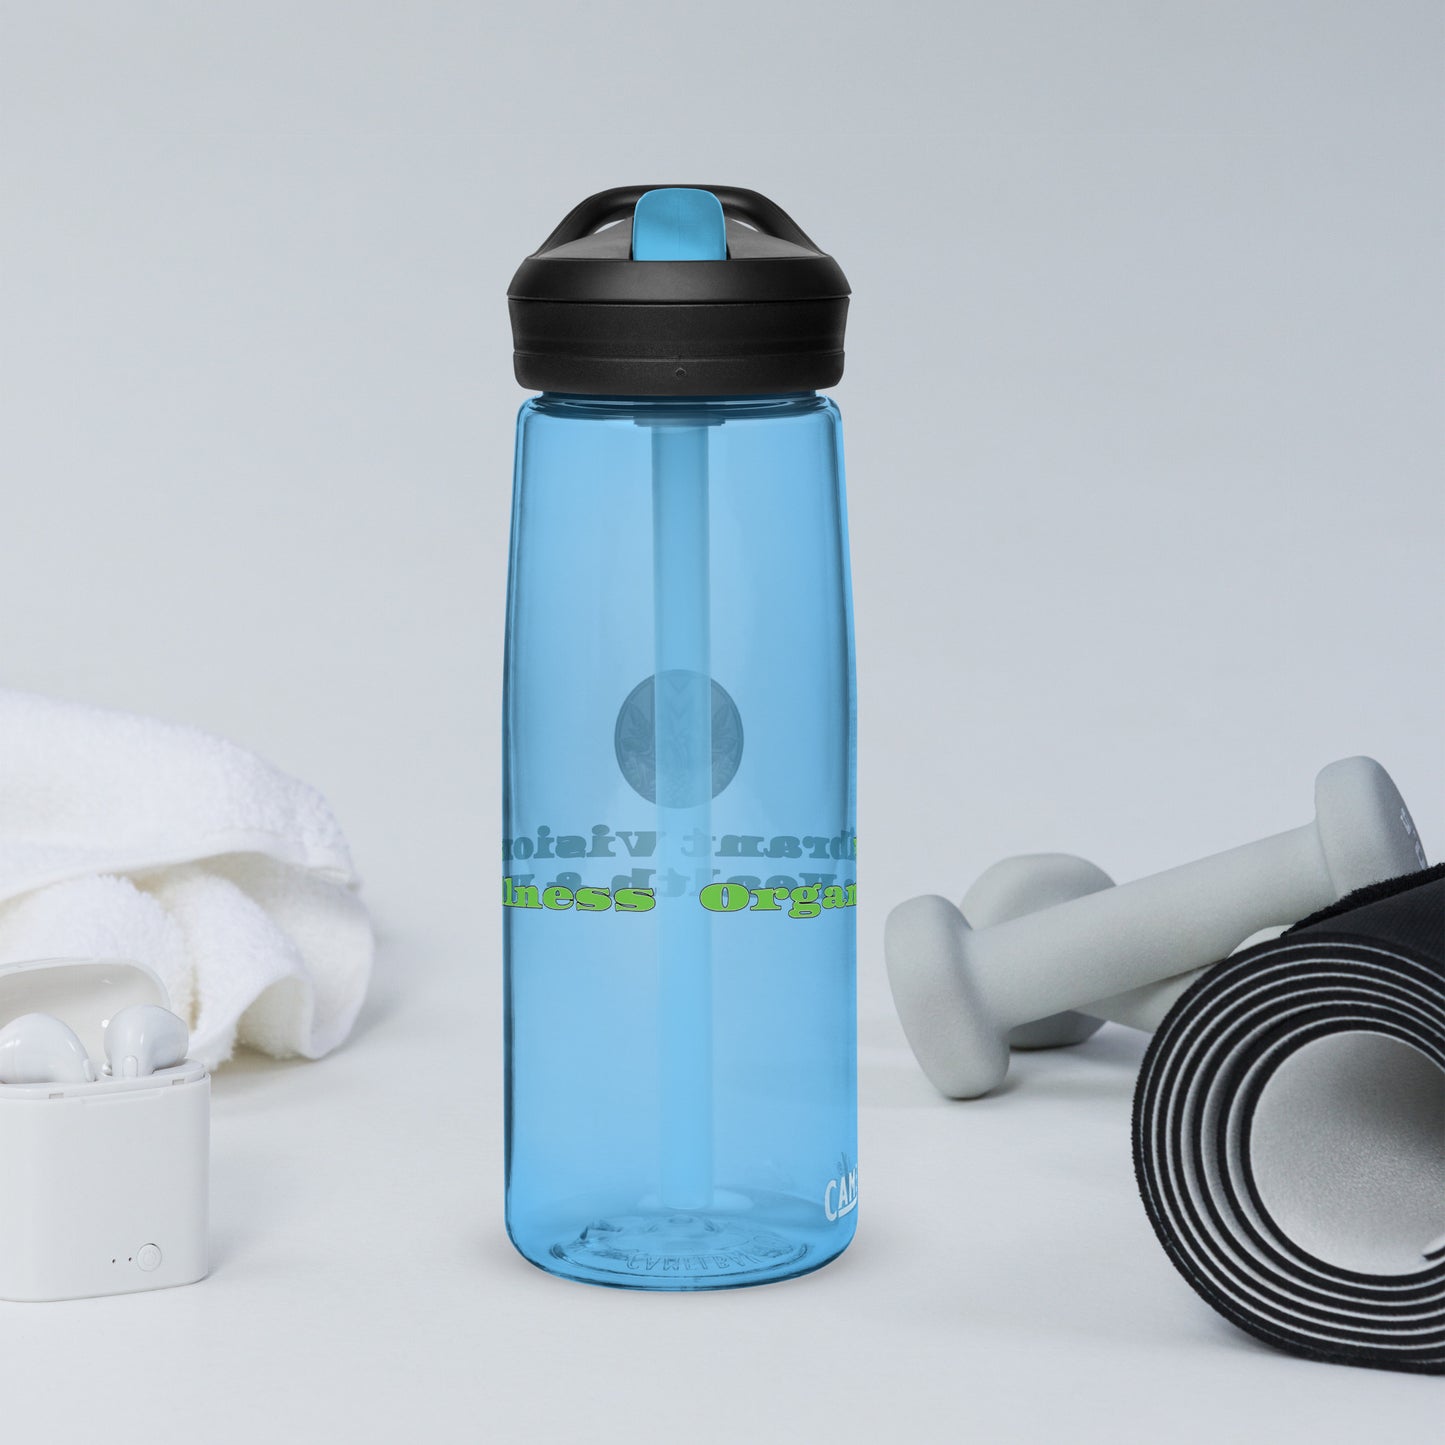 Vibrant Visions - Organic Health & Wellness - CamelBak Made Sports water bottle, Gym Bottle